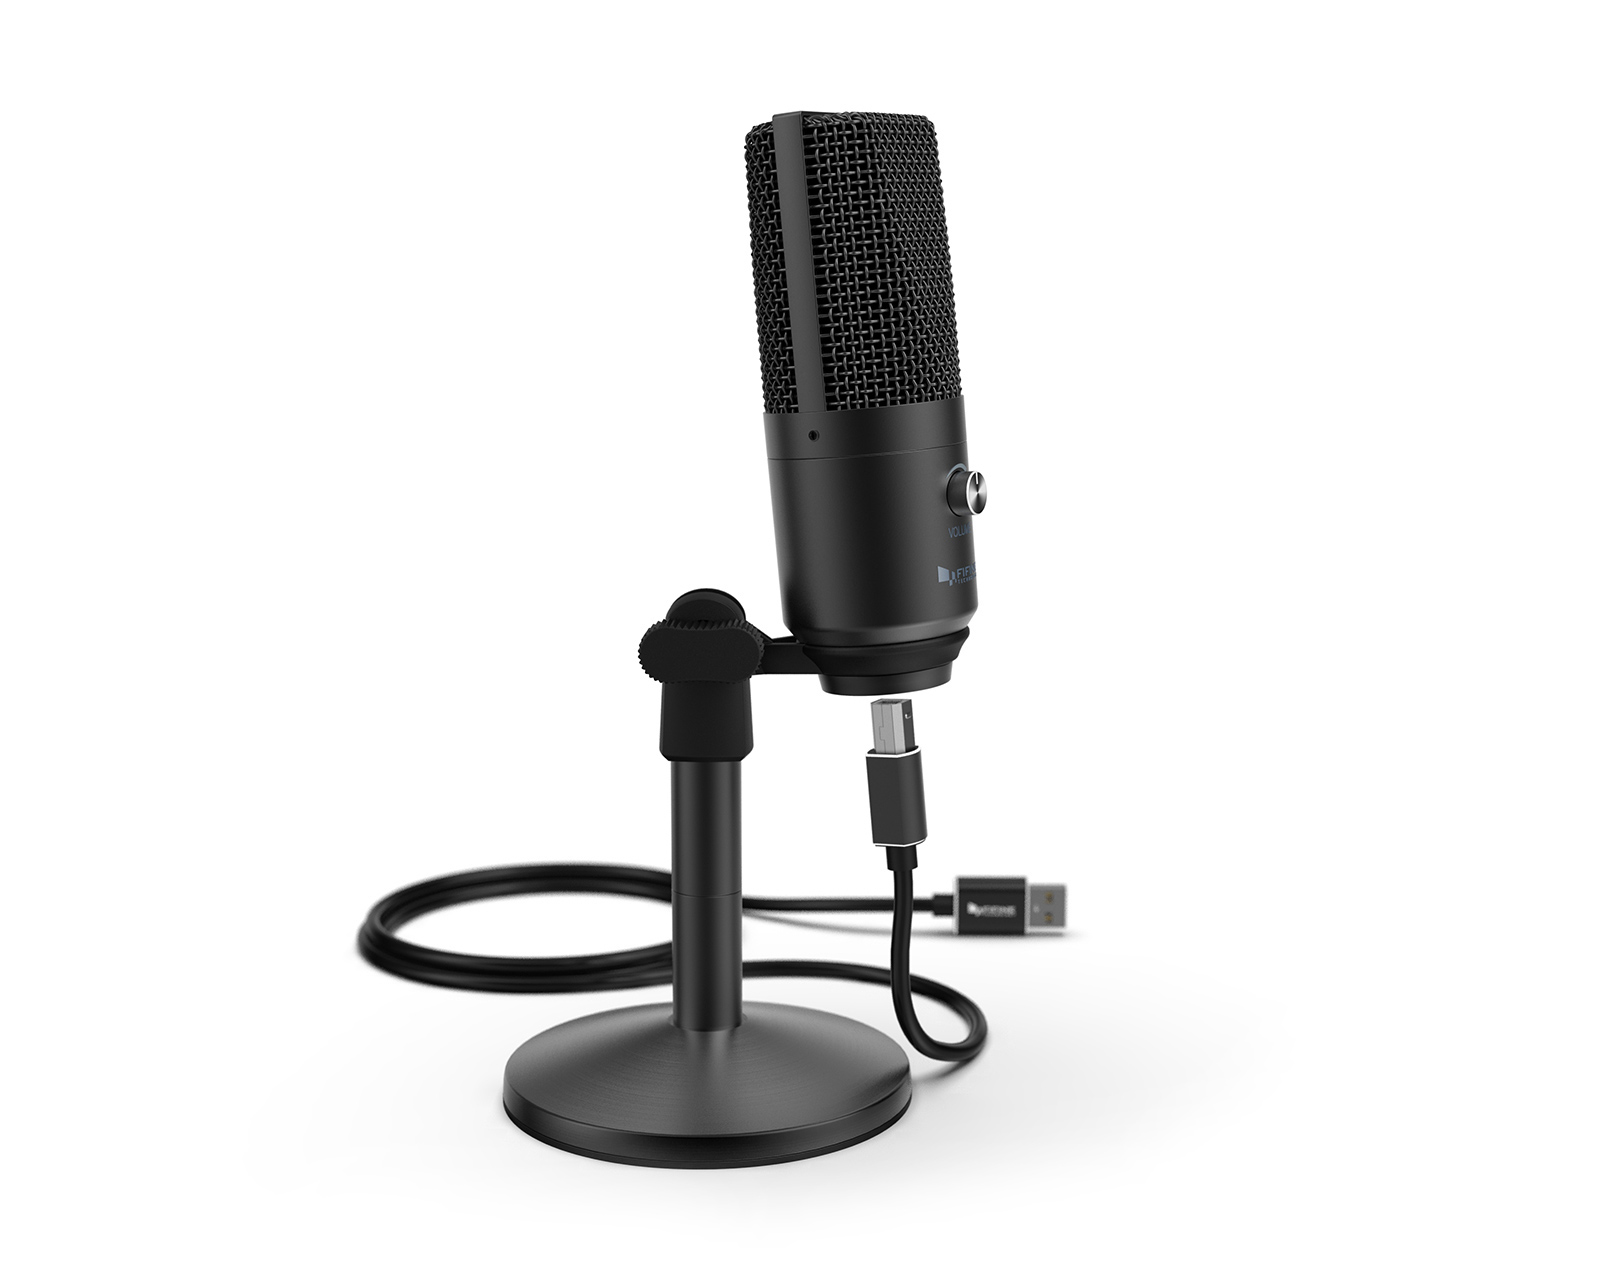 Fifine USB Microphone K670B - Black